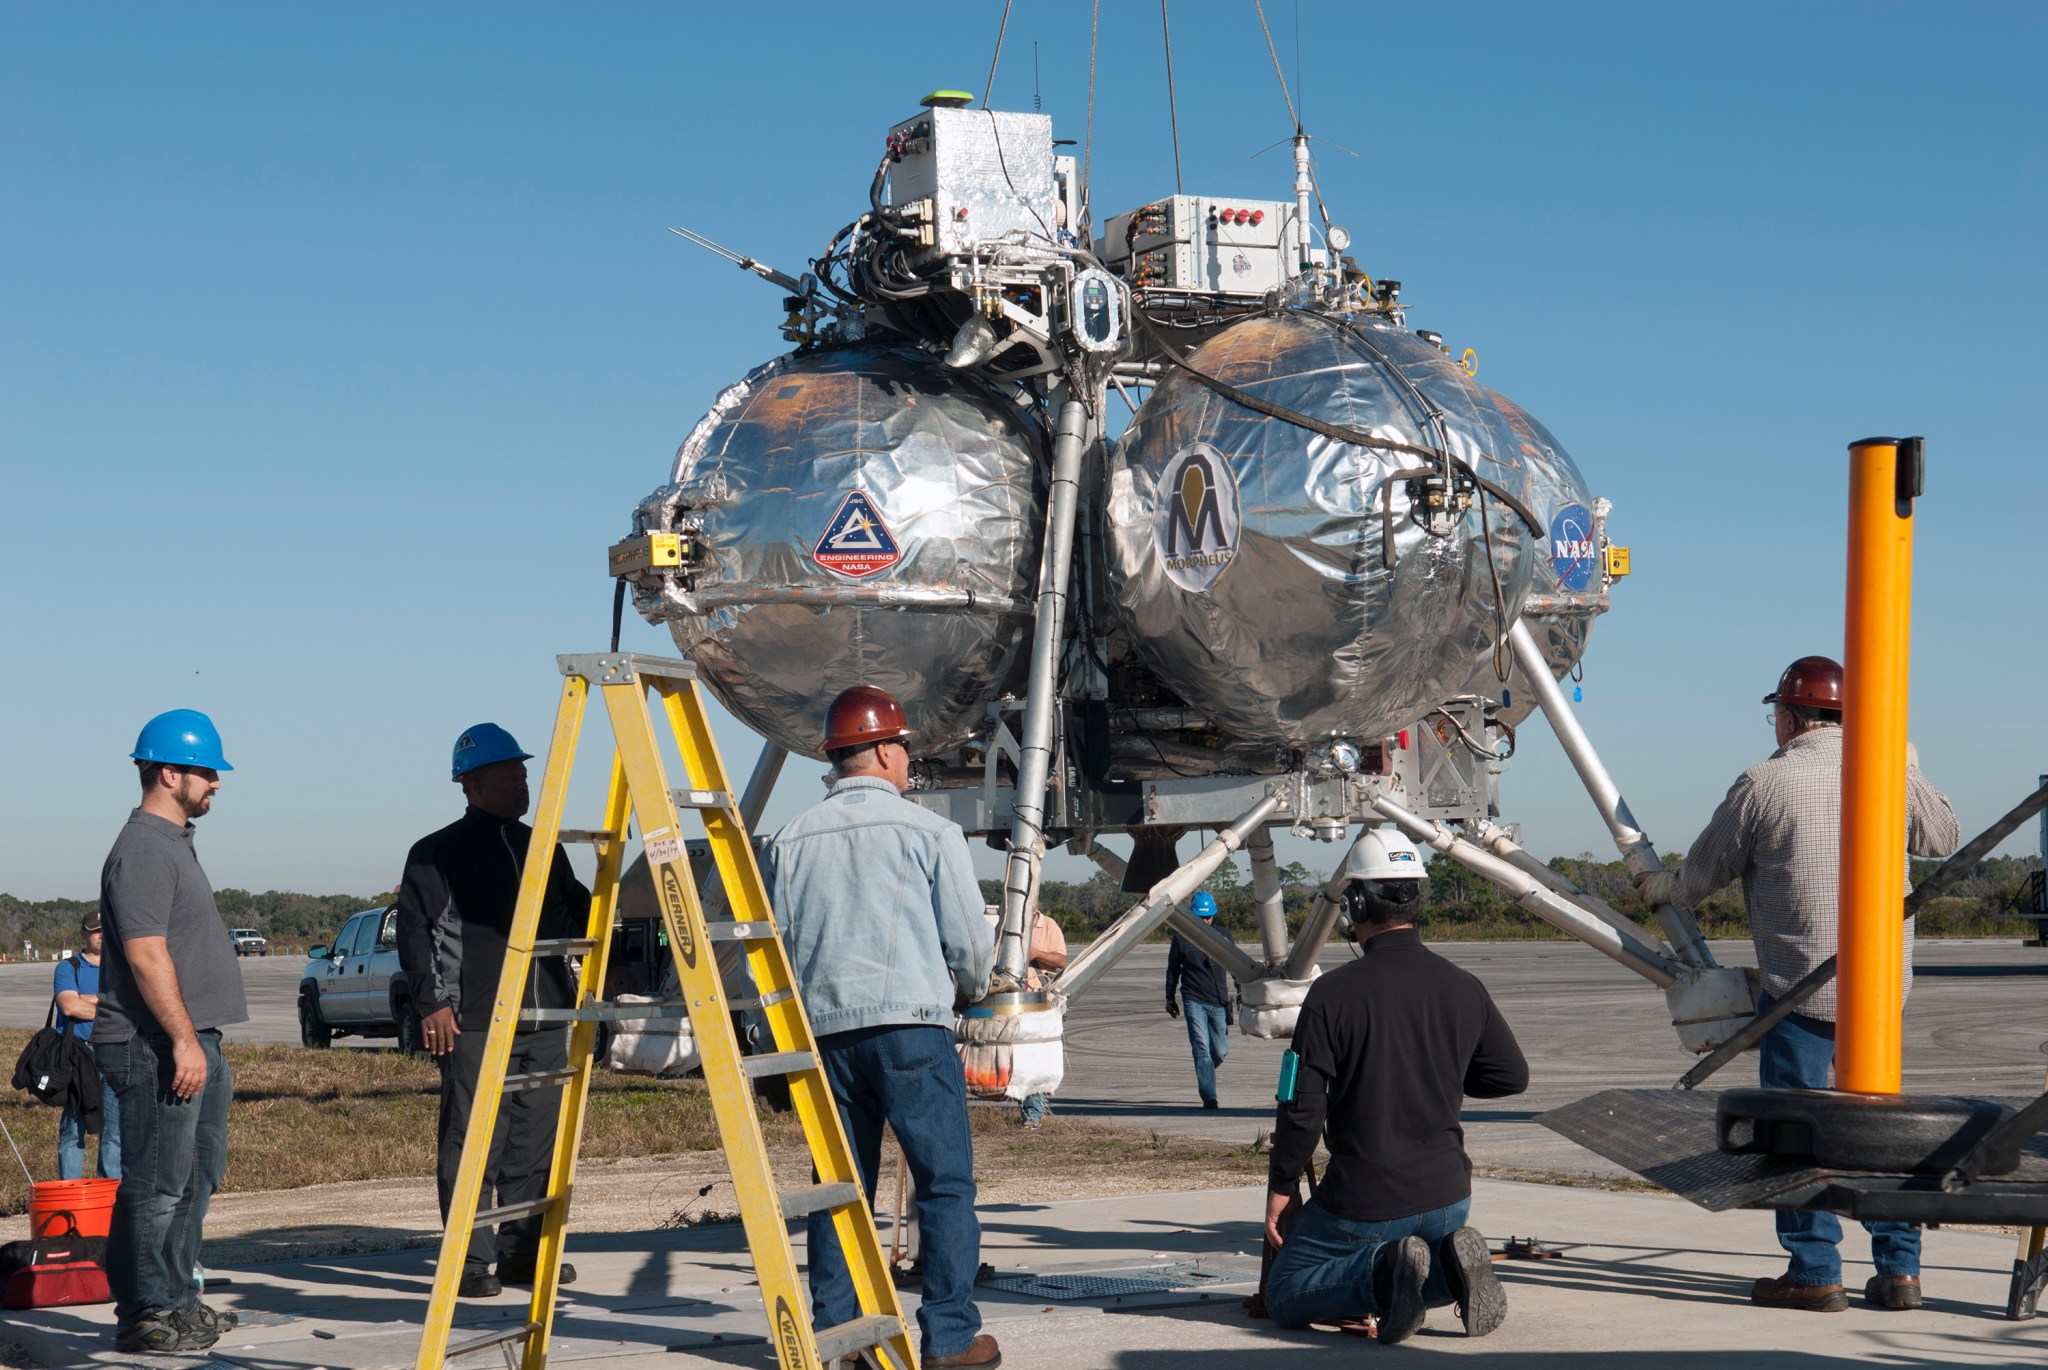 Technicians prepare the Morpheus prototype lander for a free flight test.